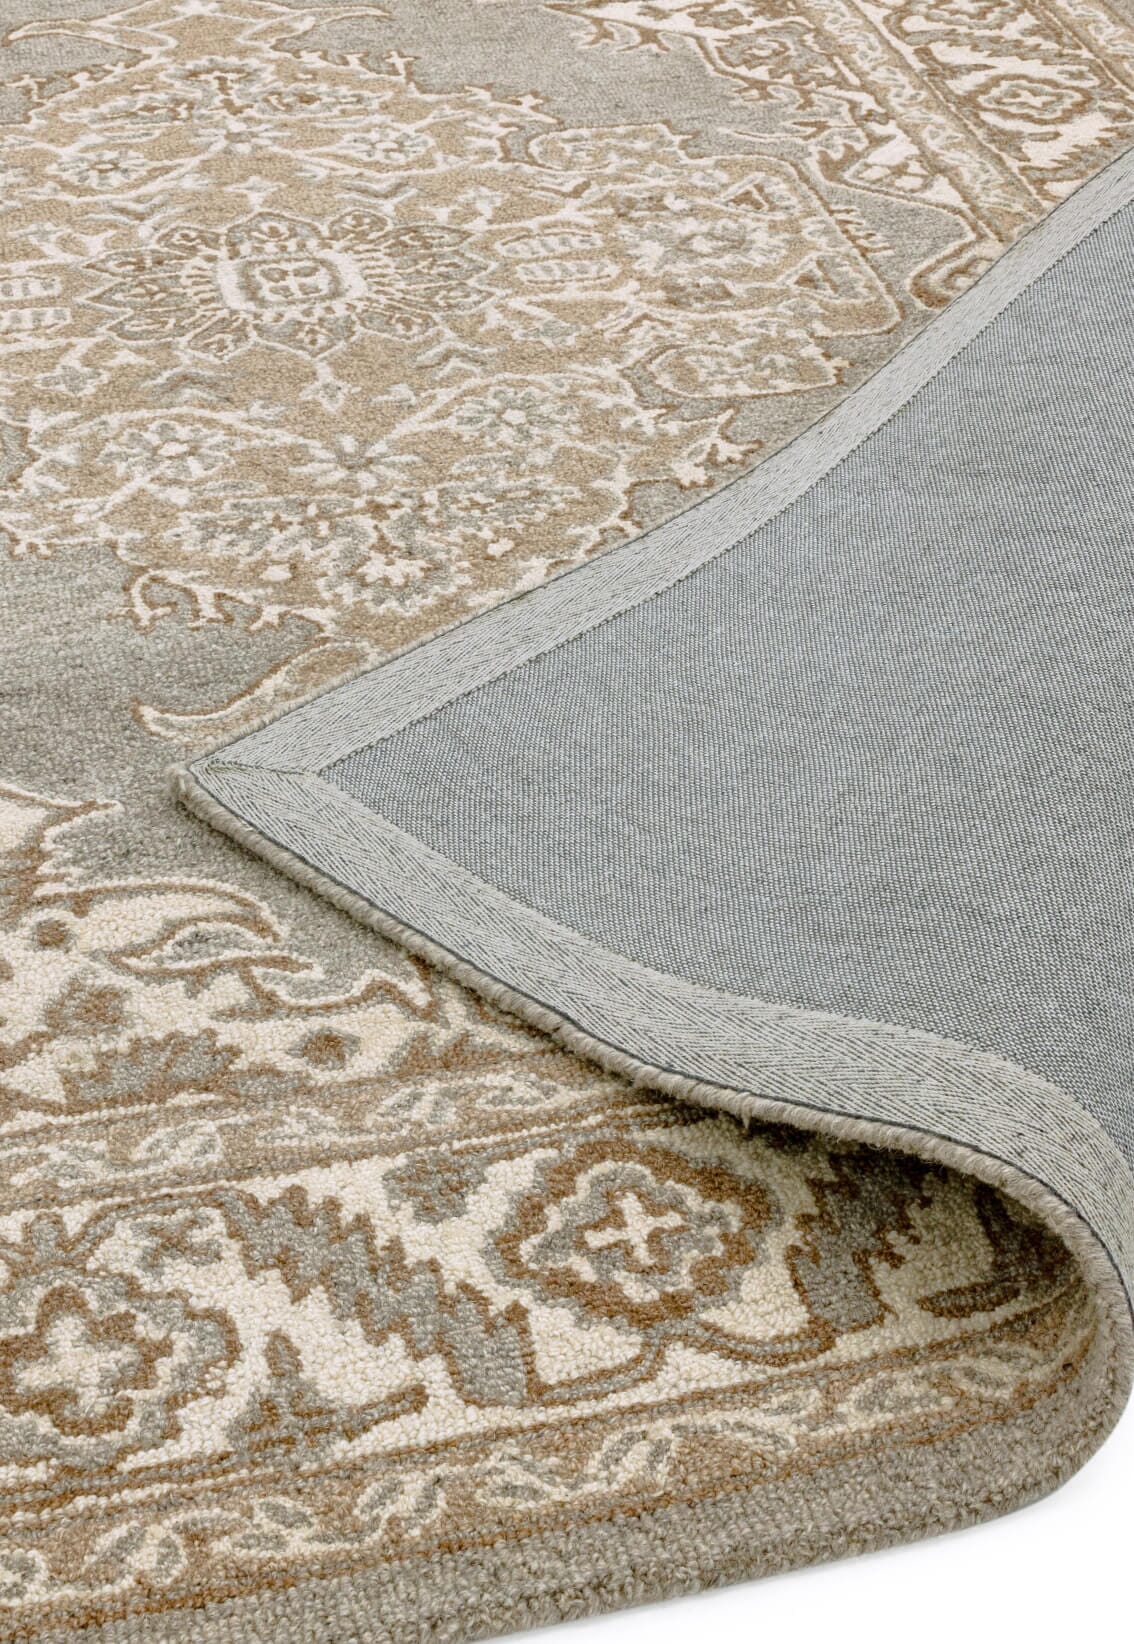  Asiatic Carpets-Asiatic Carpets Bronte Fine Loop Hand Tufted Rug Natural - 160 x 230cm-Beige, Natural 989 